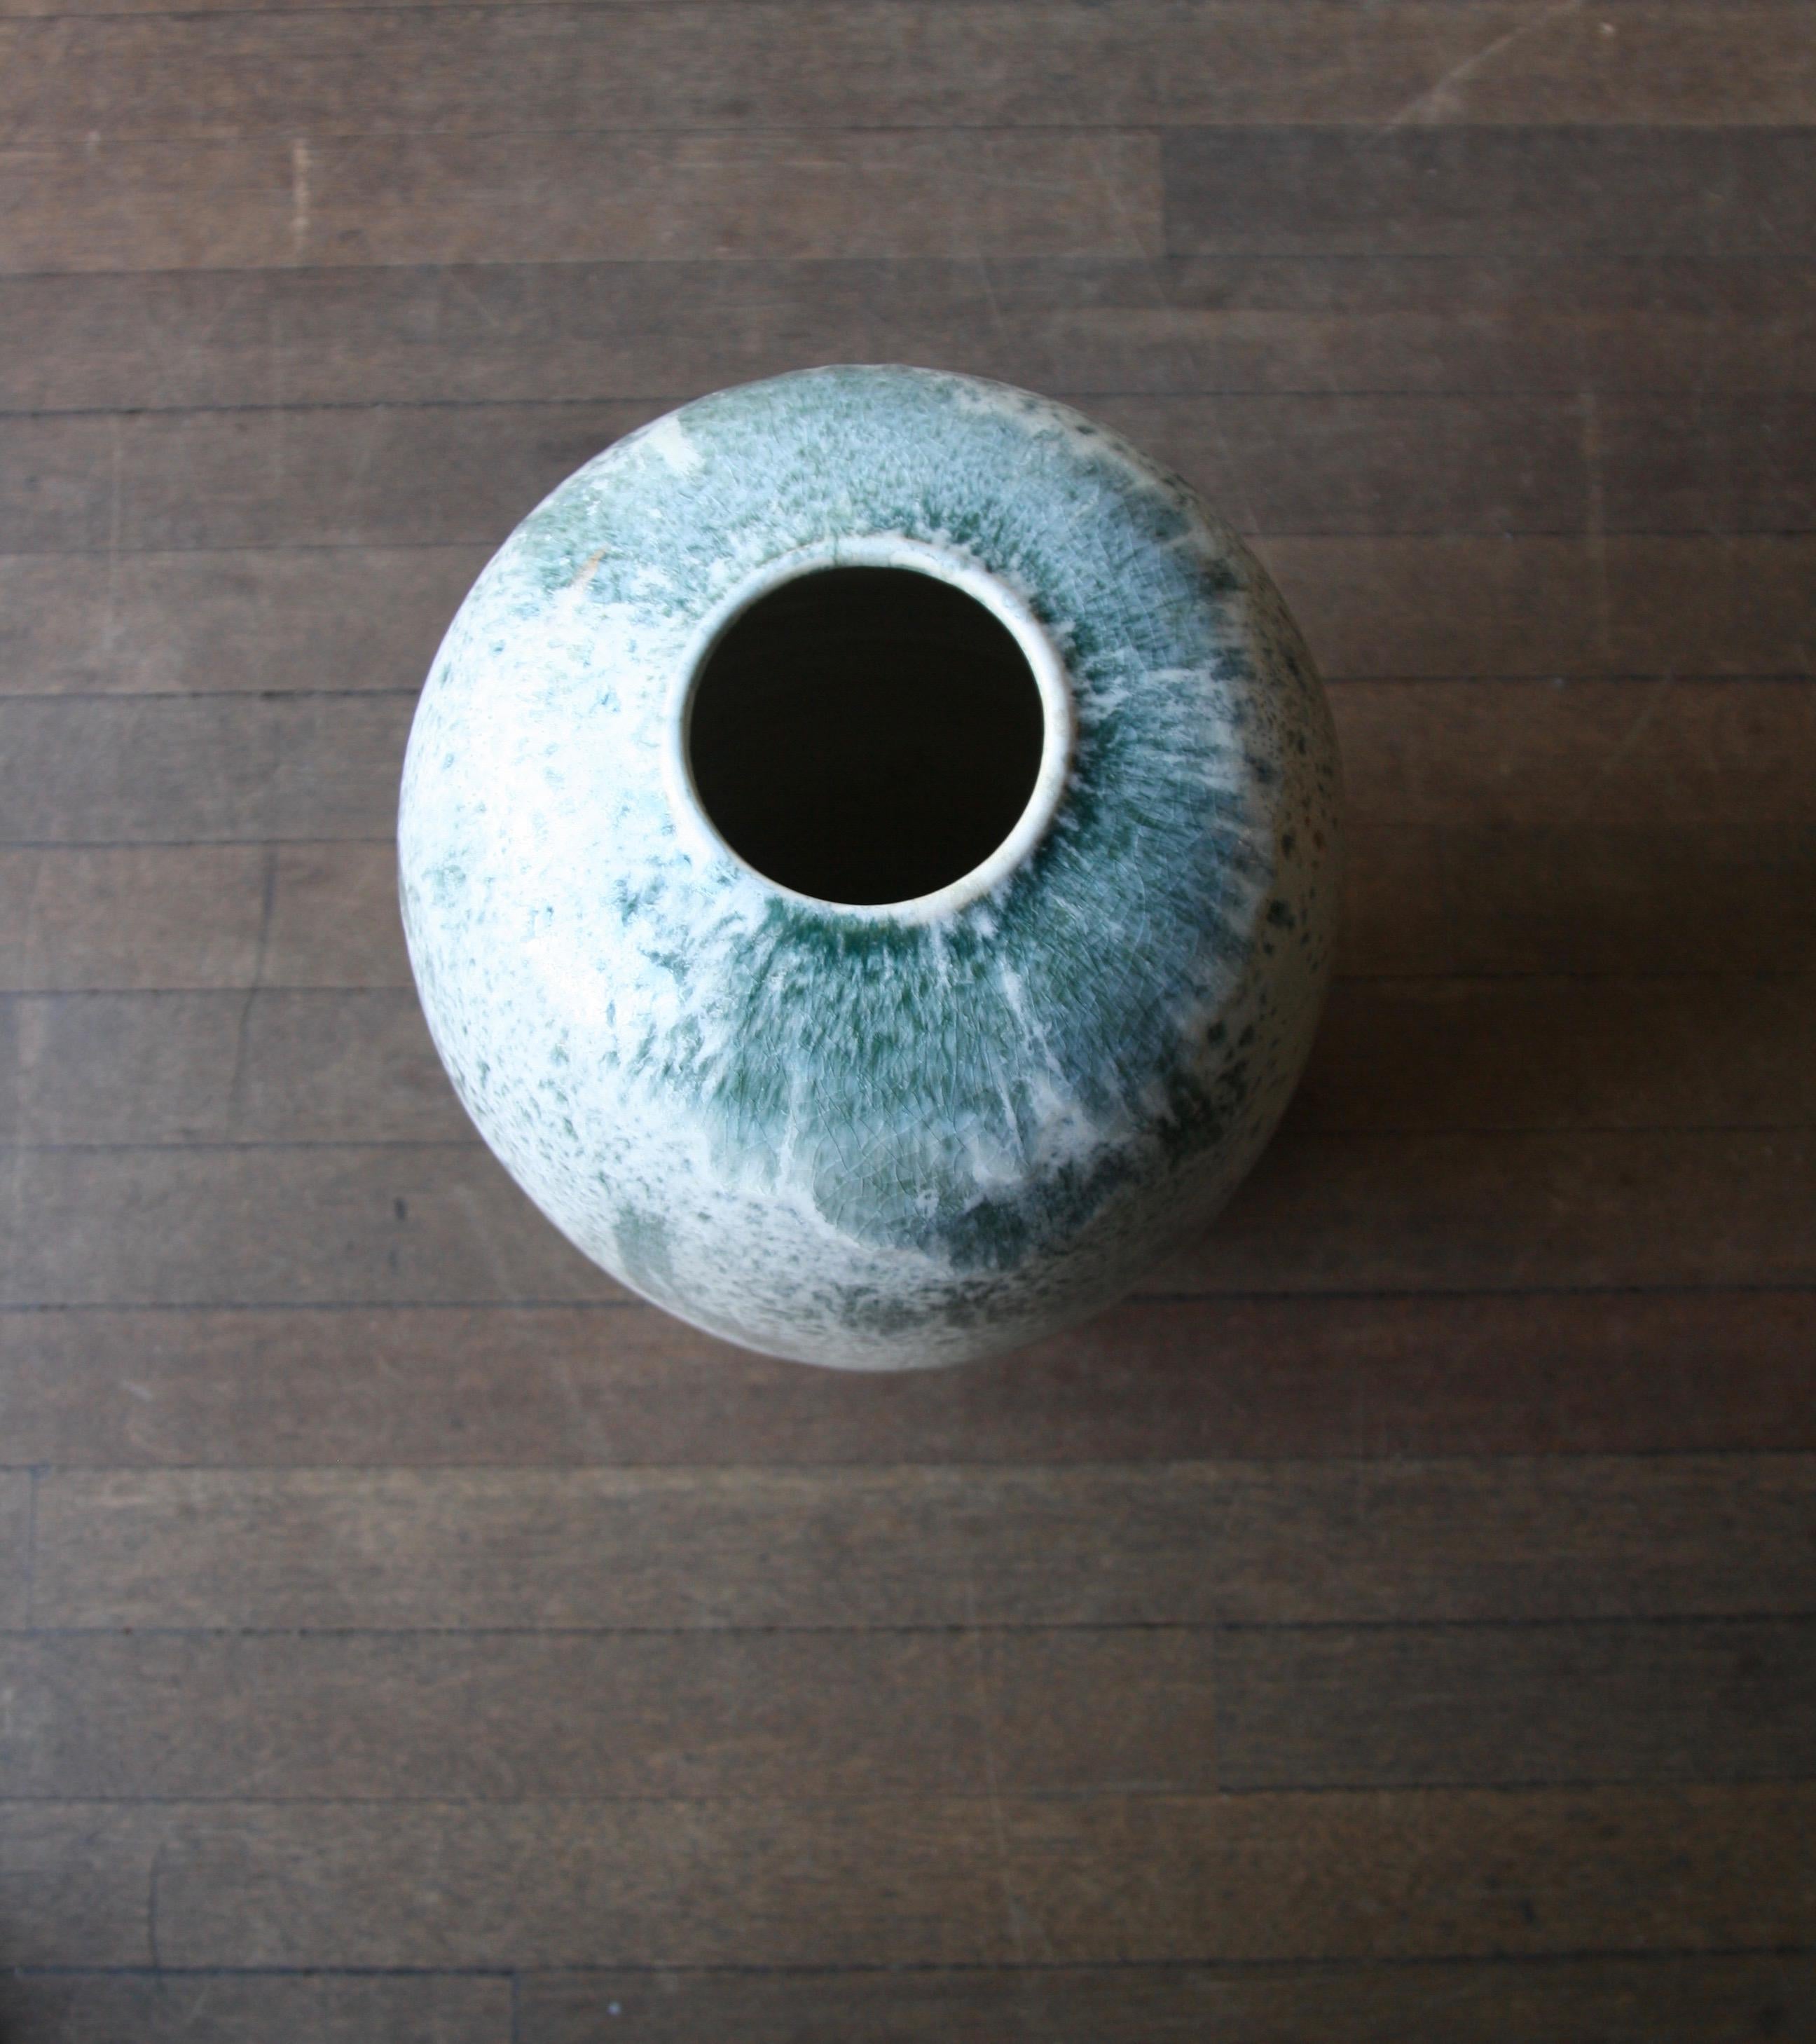 Contemporary Kasper Würtz One Off Stoneware 'Rising Balloon' Vase #1 Blue and White Glaze